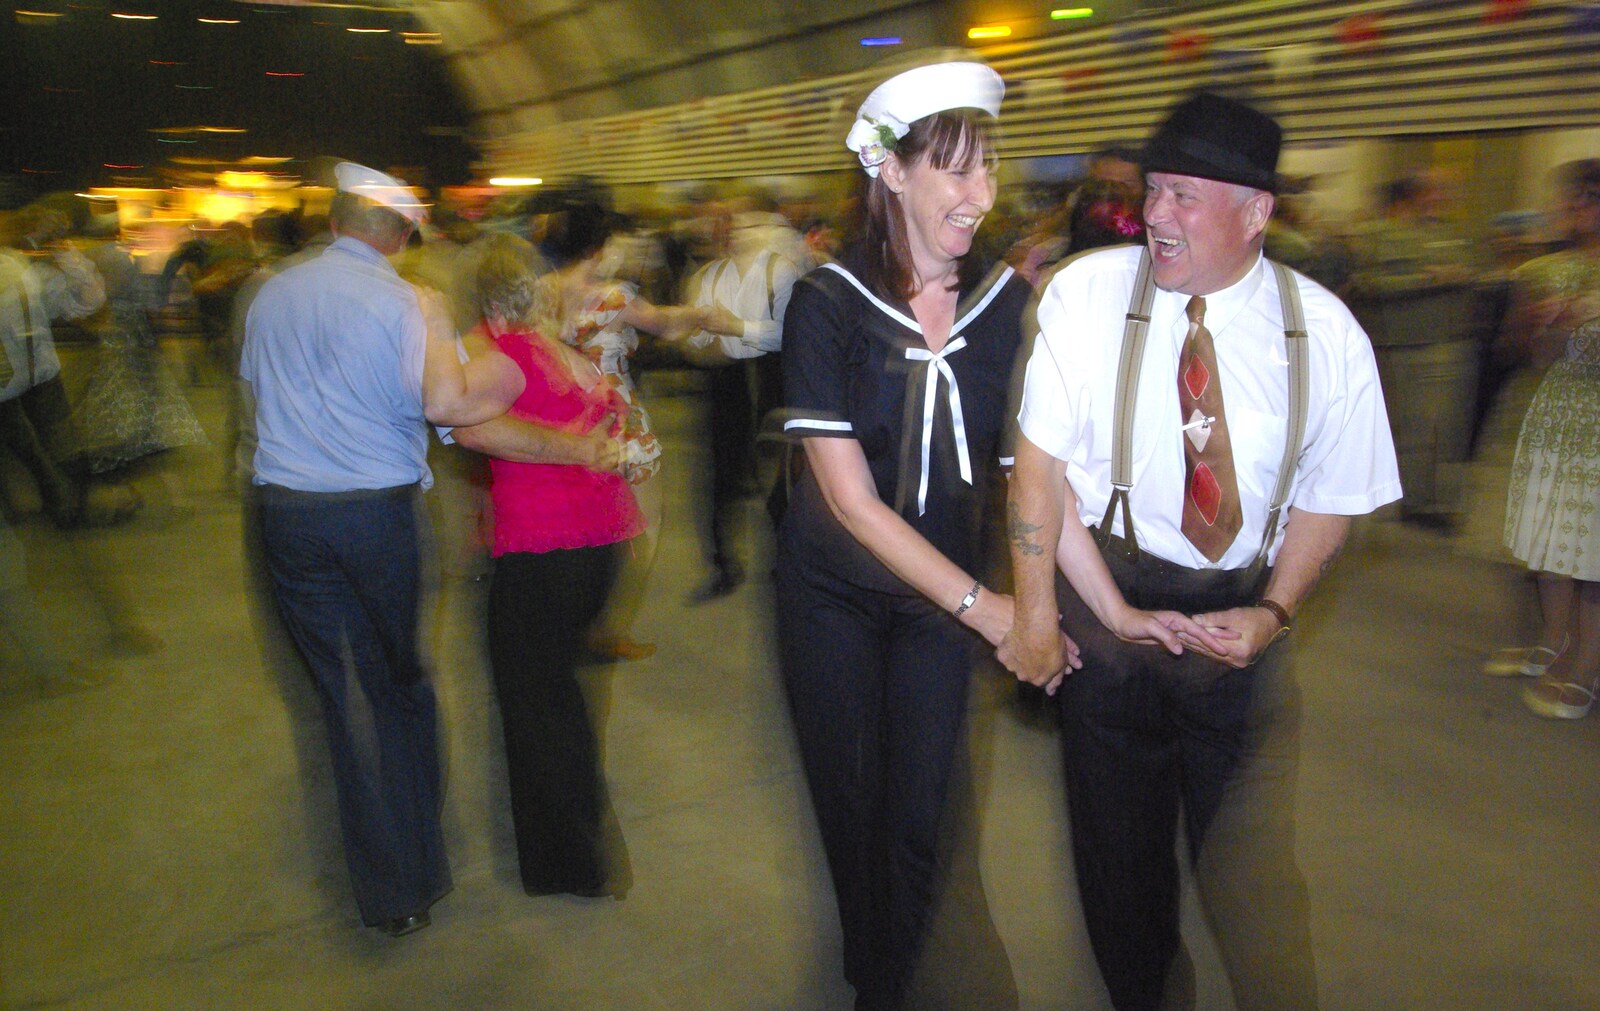 Swing dancing from The Debach Airfield 1940s Dance, Debach, Suffolk - 6th June 2009